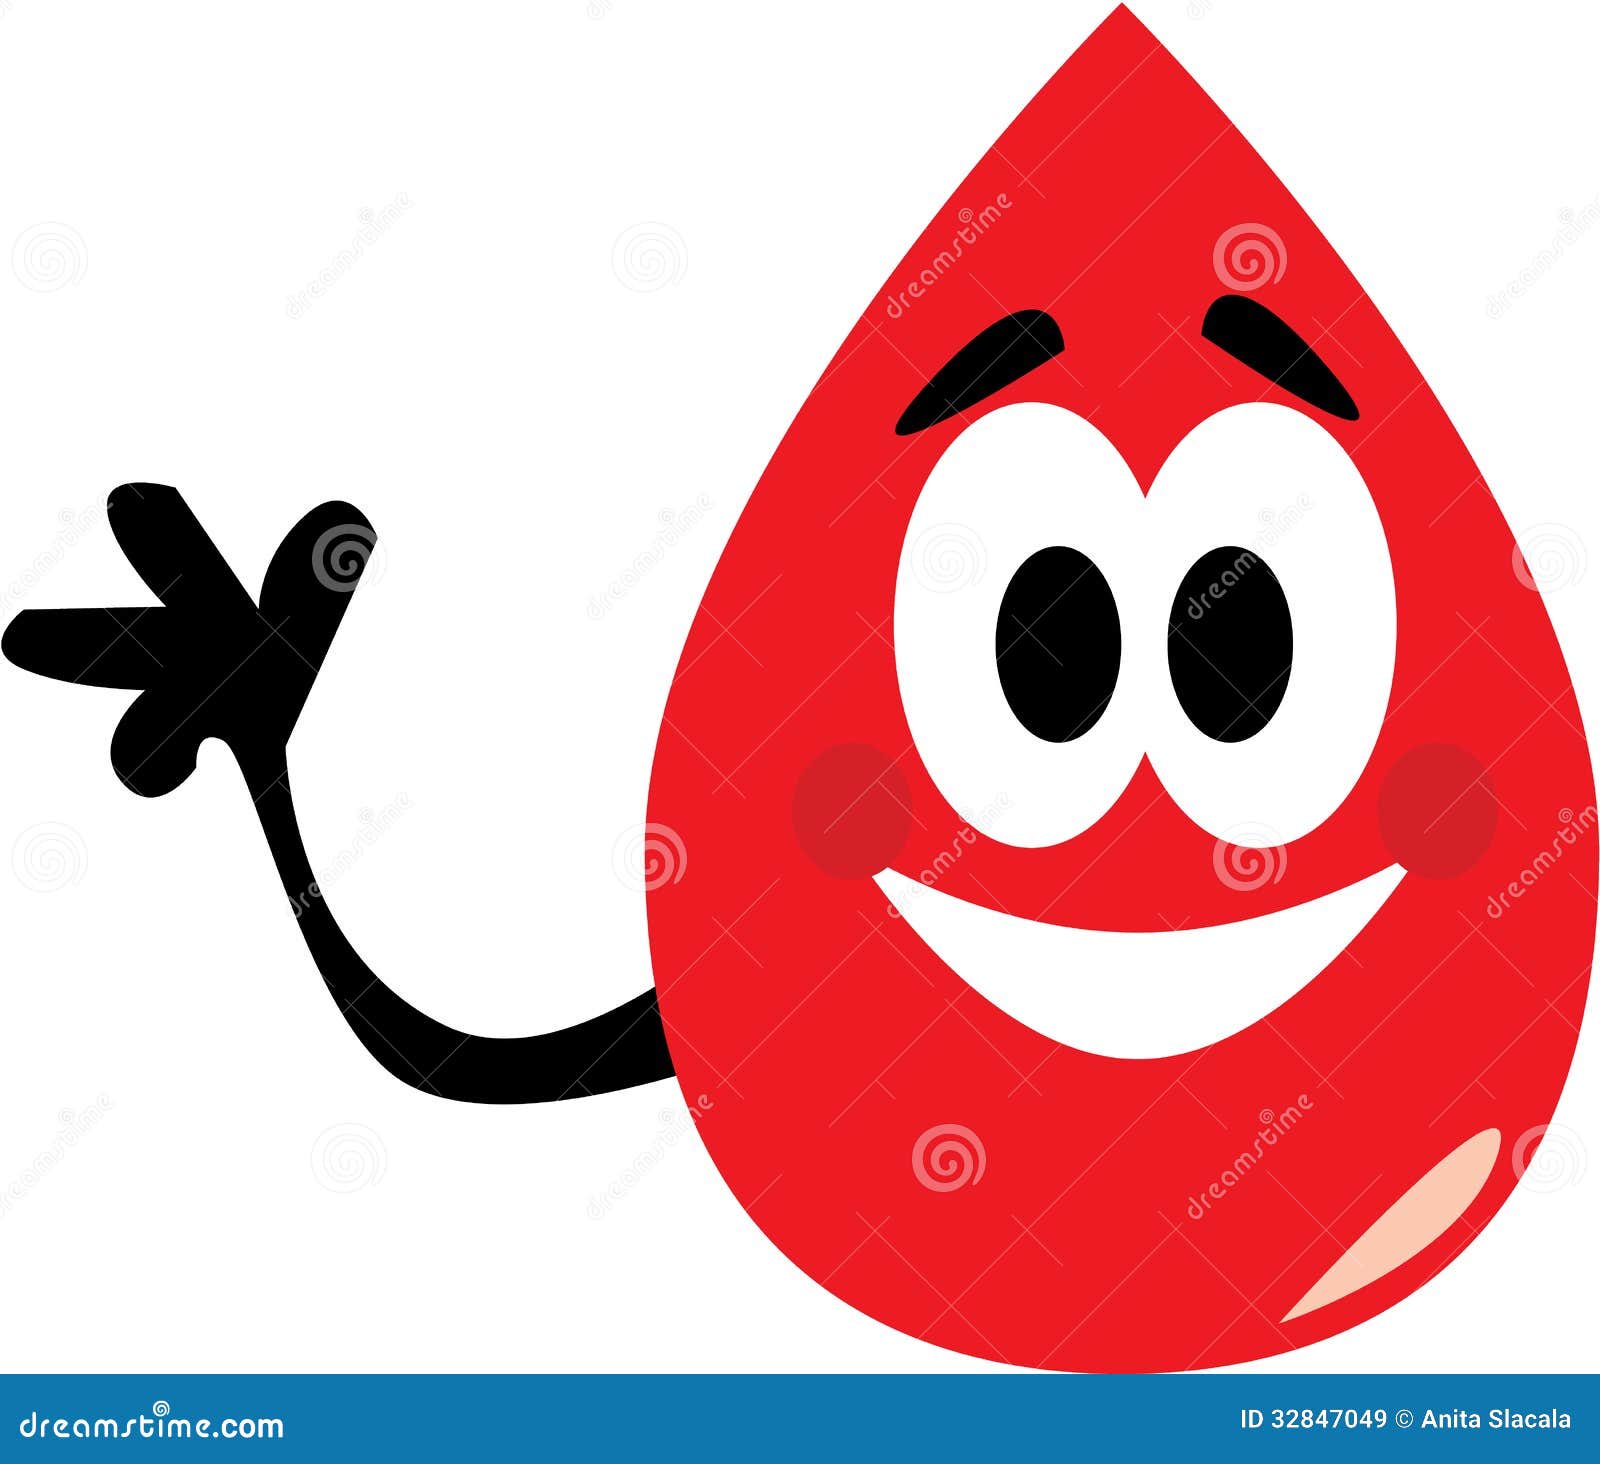 blood transfusion clipart - photo #35